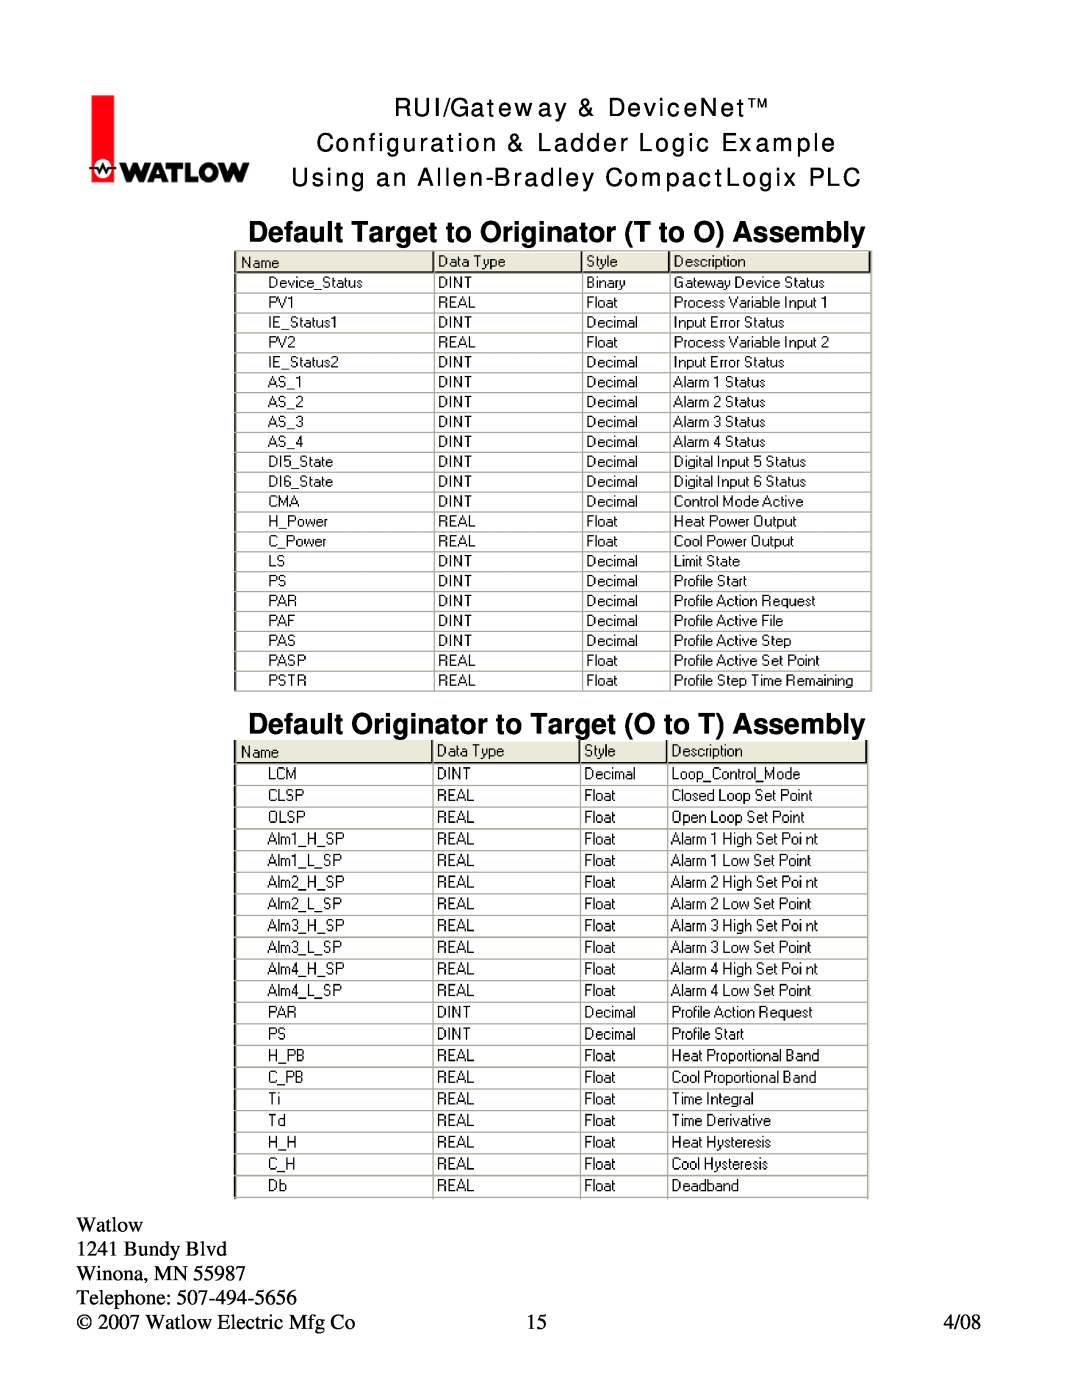 Watlow Electric Gateway & DeviceNet Default Target to Originator T to O Assembly, Using an Allen-Bradley CompactLogix PLC 